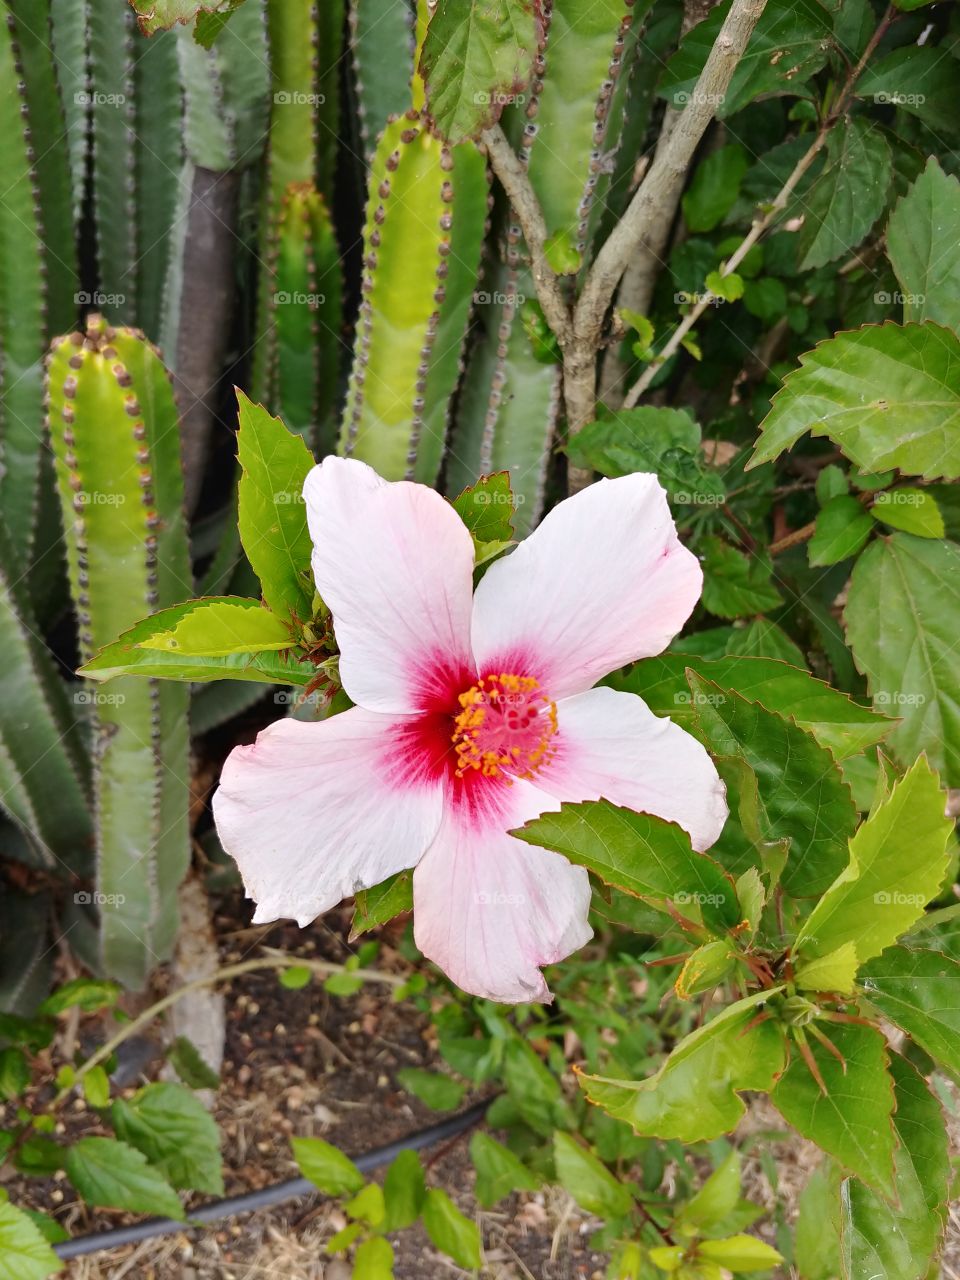 Flower of Tenerife